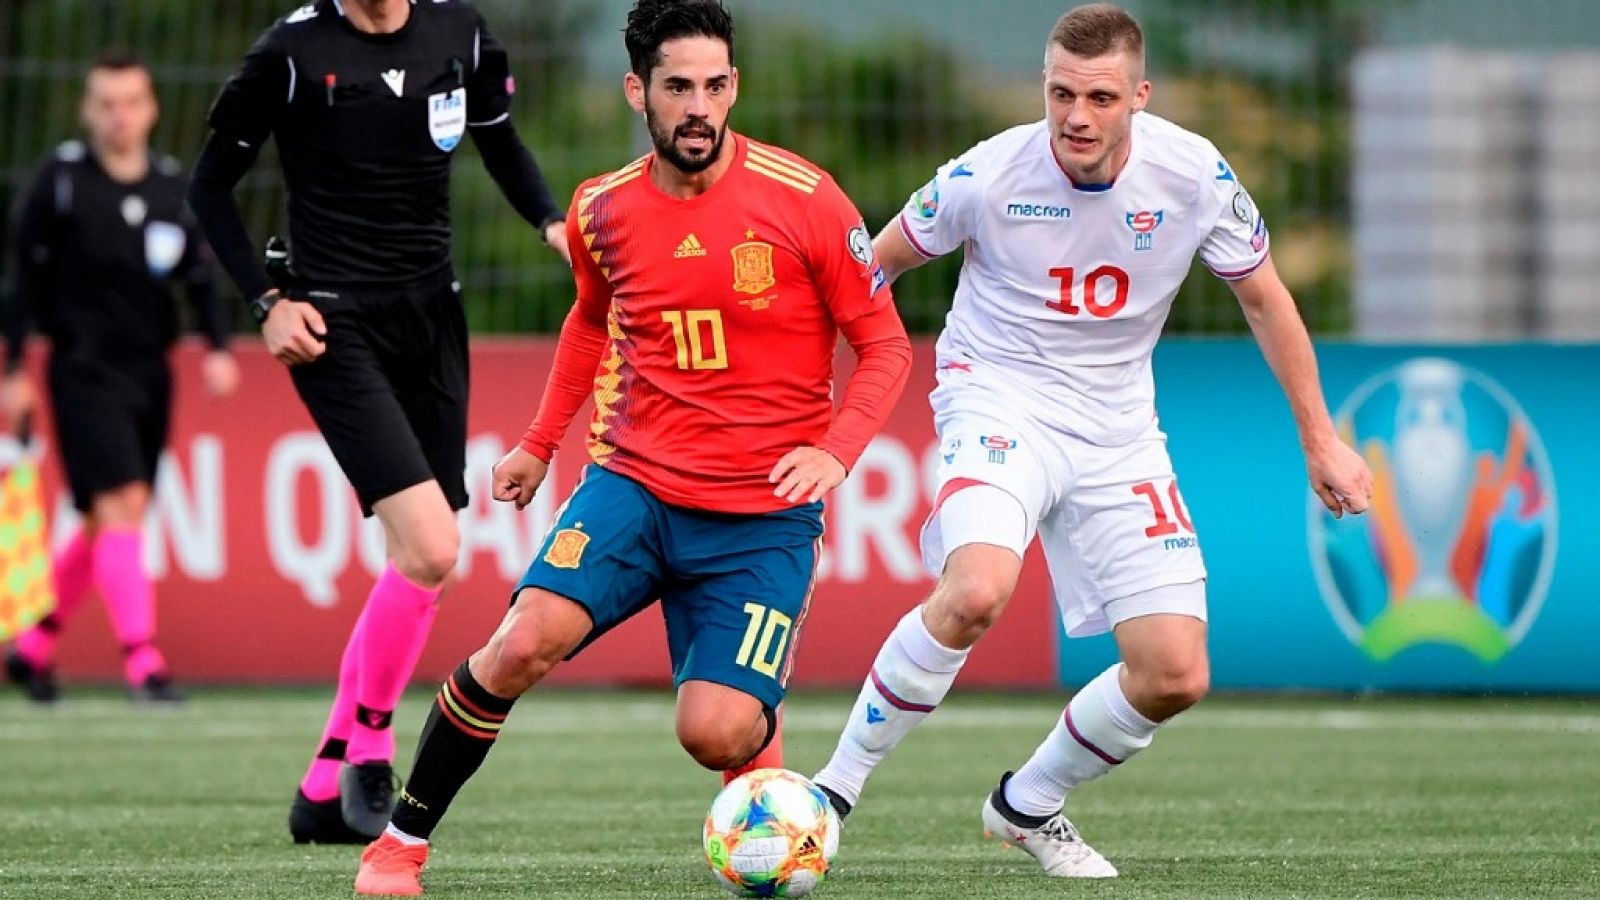 Fútbol - Partido Clasificación Eurocopa 2020: Islas Feroe - España